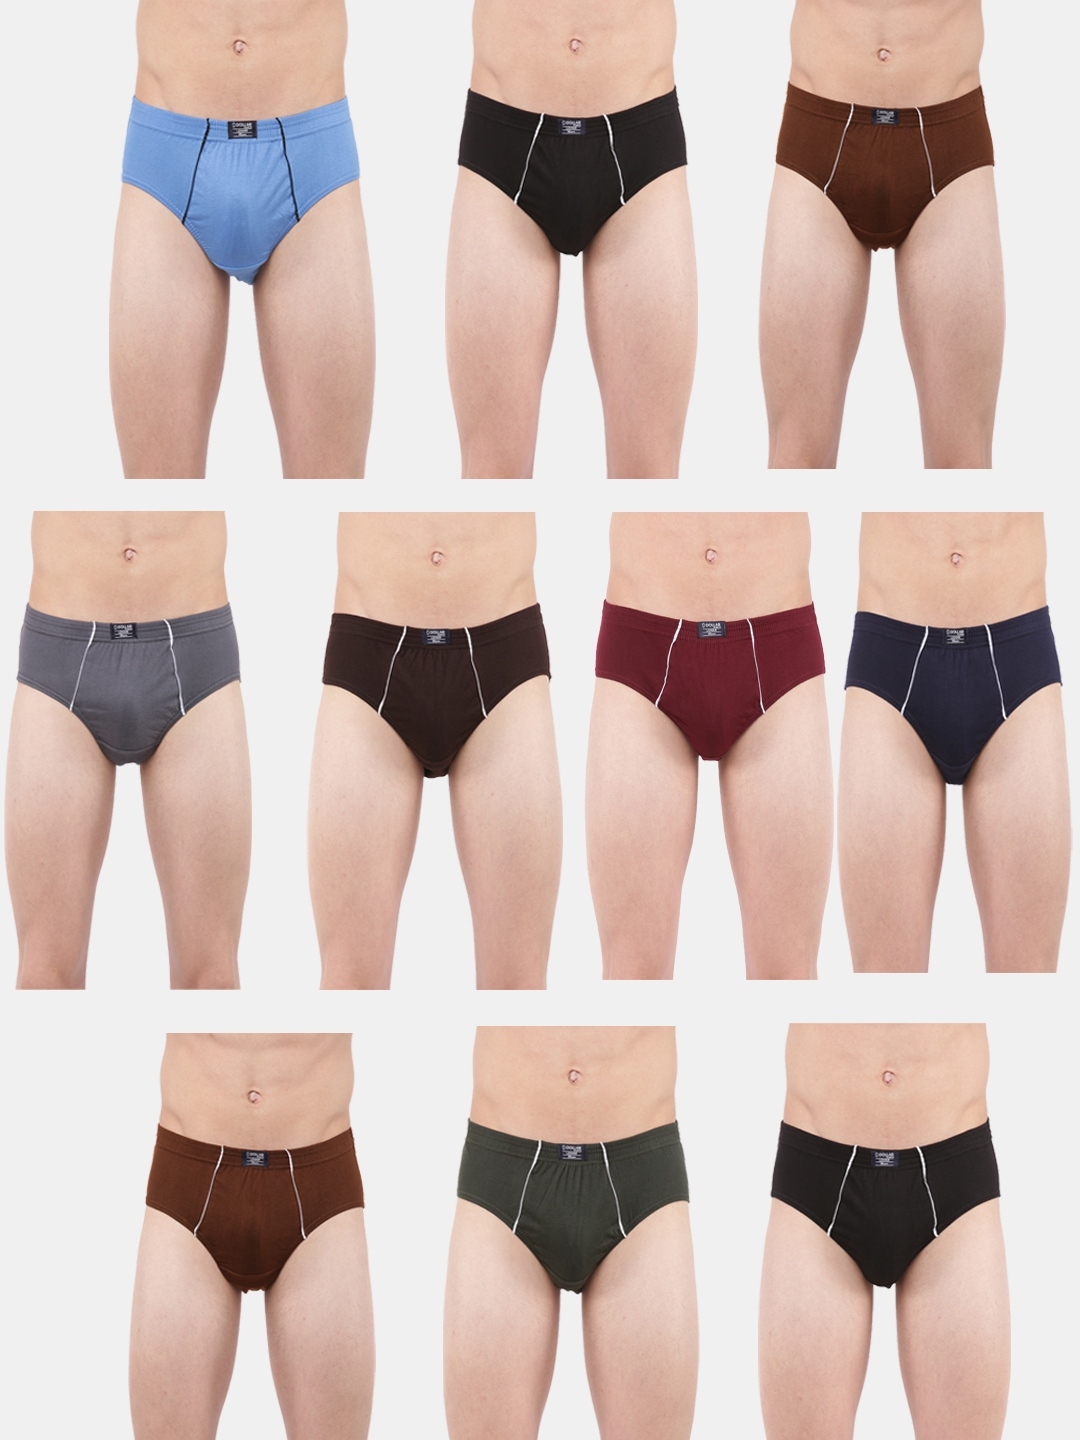 Dollar Lehar Men's Underwear Long Trunk (T/E) - Pack of 4 - BAGDA BAZAAR